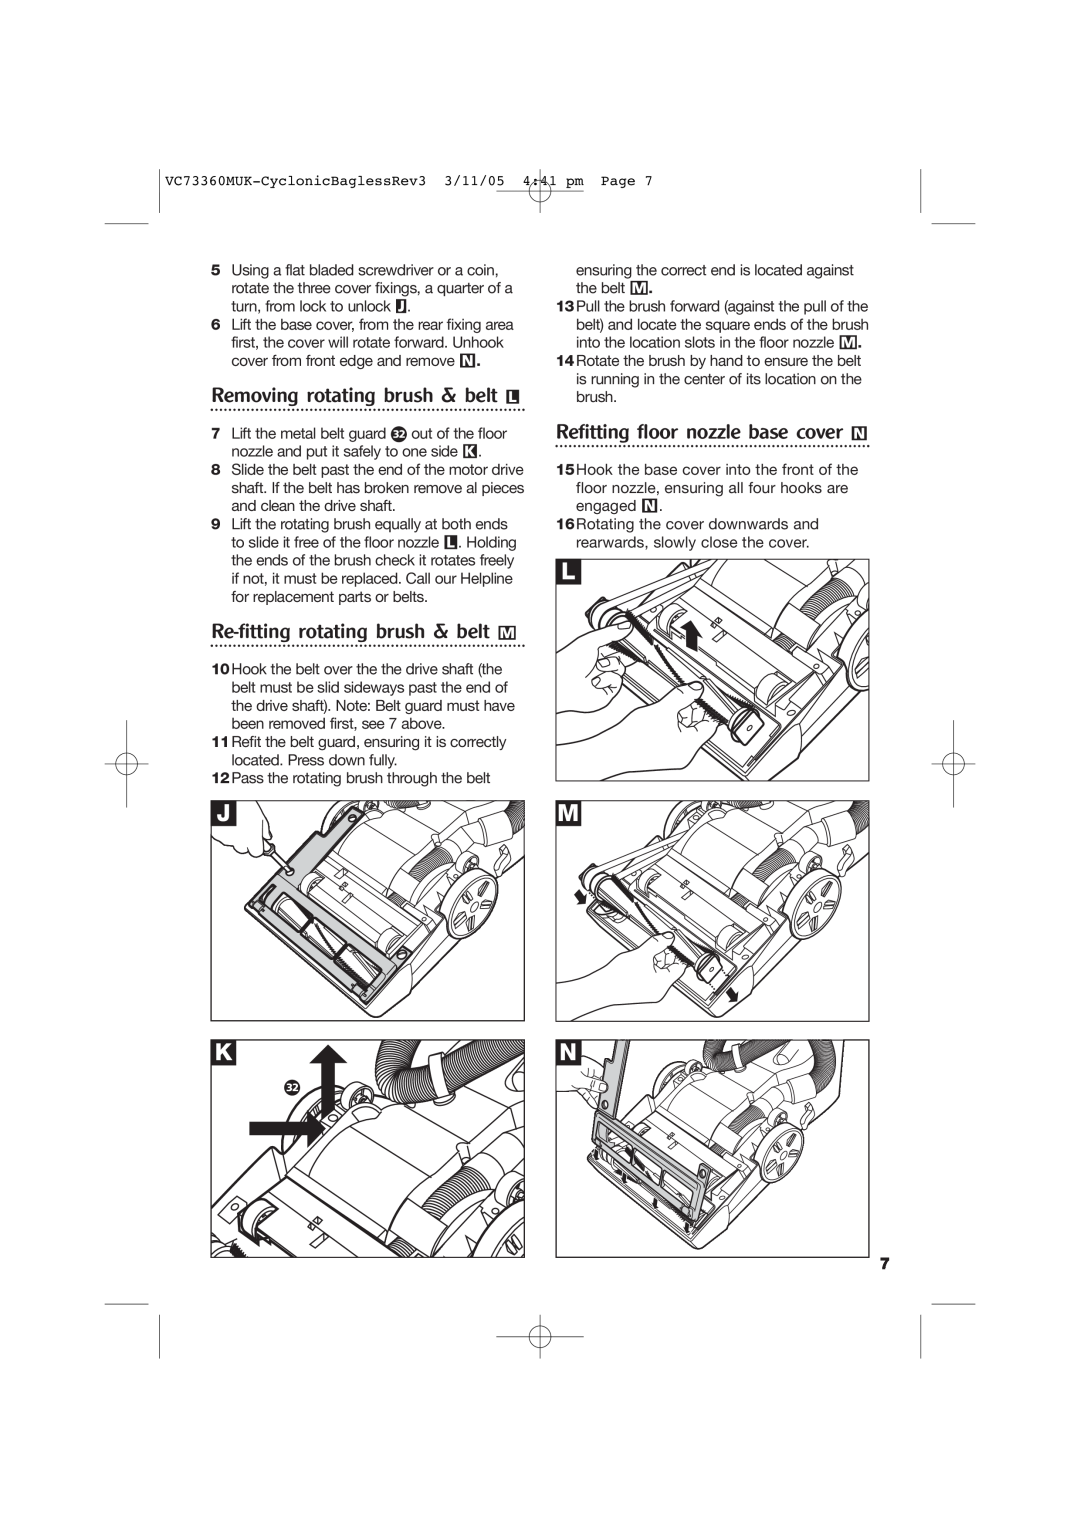 Morphy Richards Bagless Vacuum Cleaner manual Removing rotating brush & belt L, Re-fittingrotating brush & belt M 